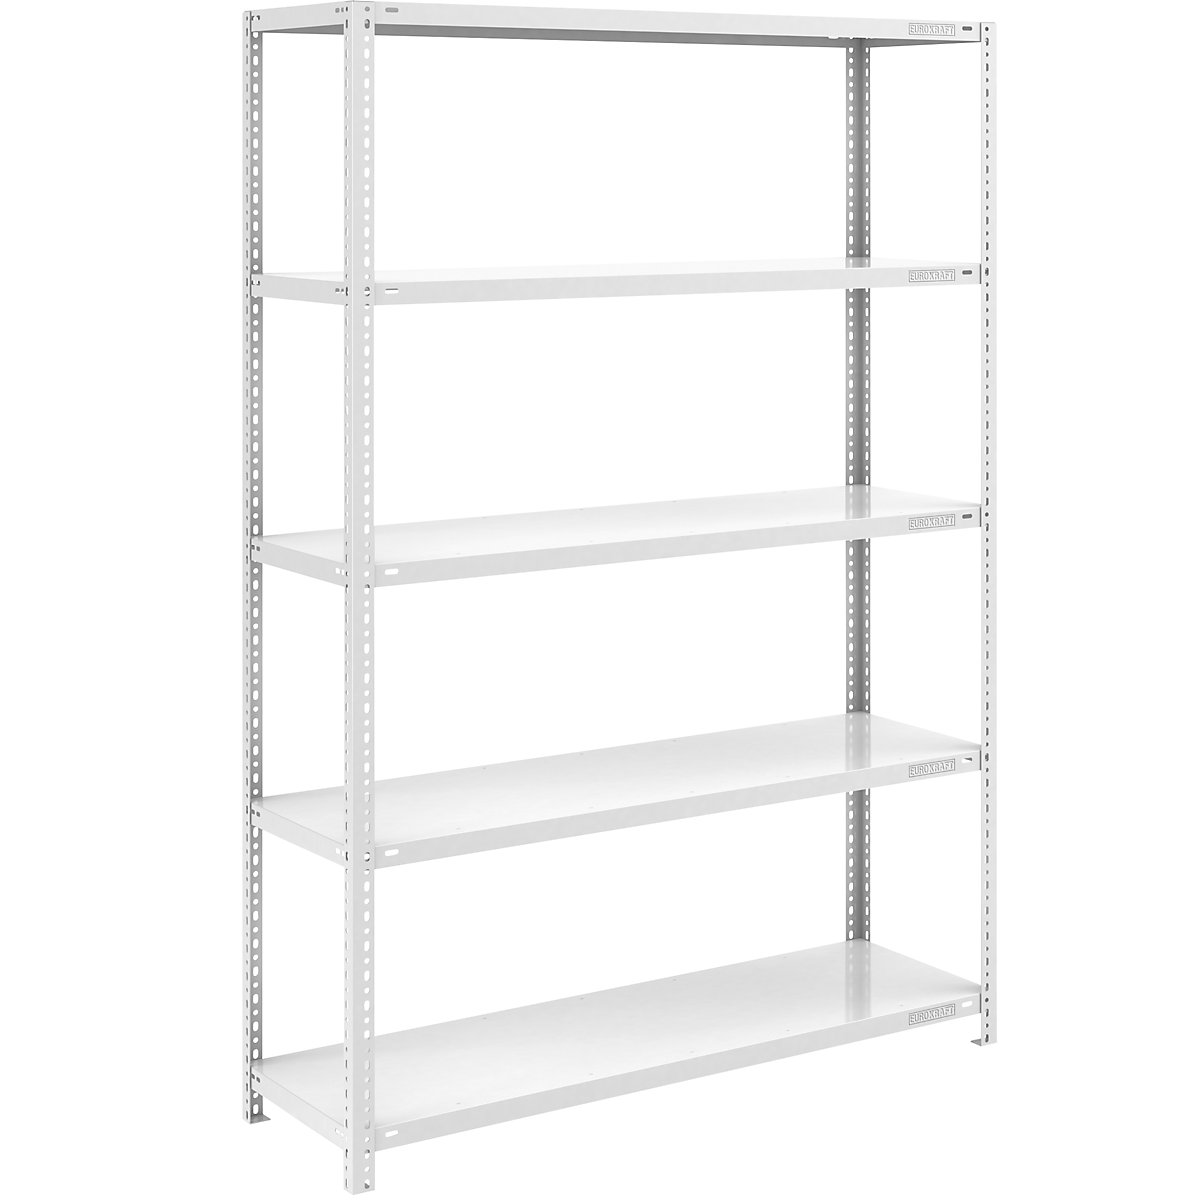 Bolt-together shelf unit, light duty, plastic coated – eurokraft pro, shelf unit height 2000 mm, shelf width 1300 mm, depth 500 mm, standard shelf unit-13